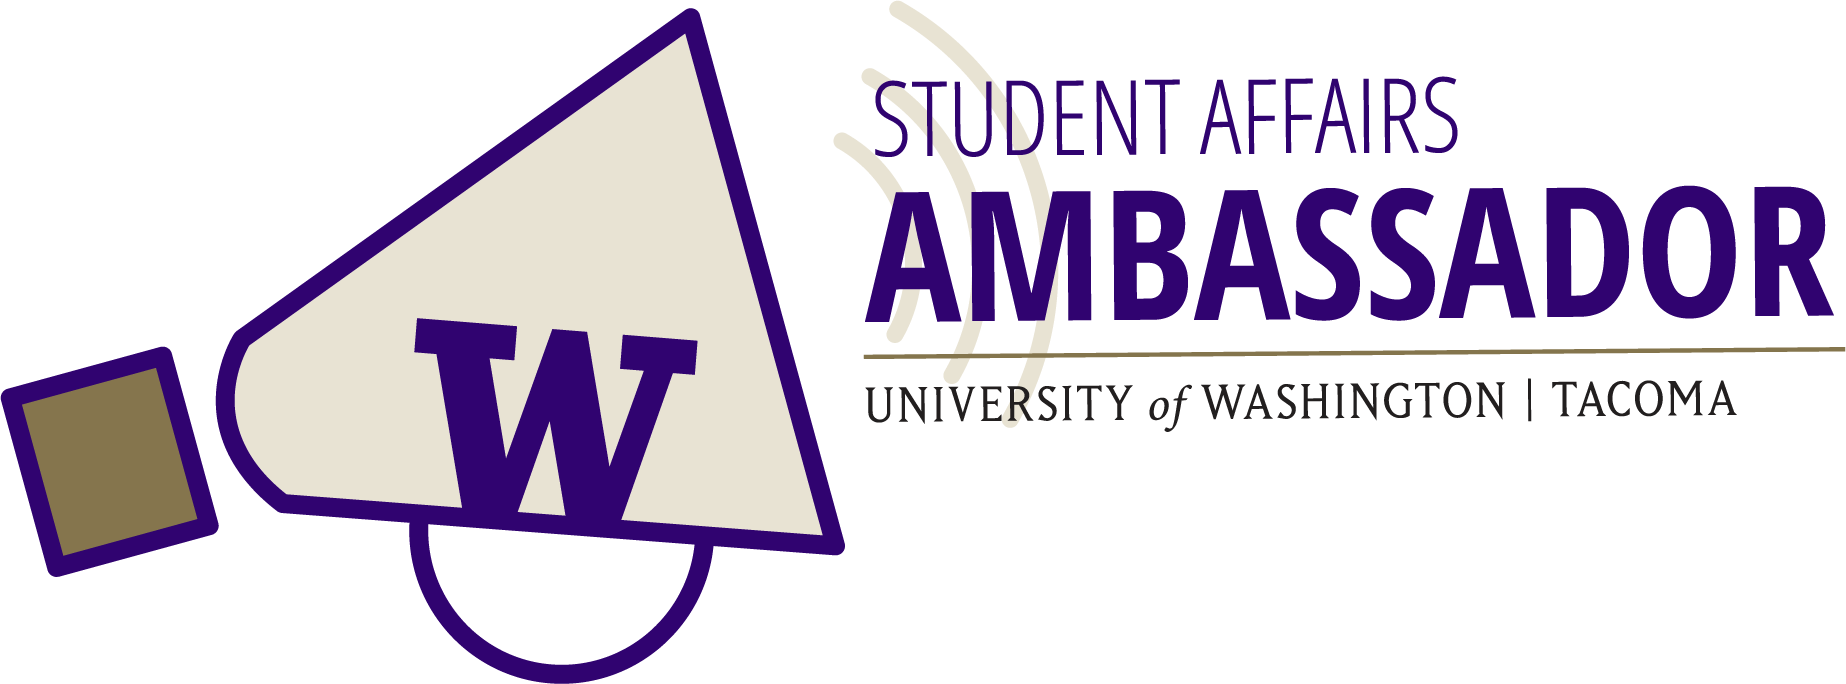 Student Affairs Ambassador Logo